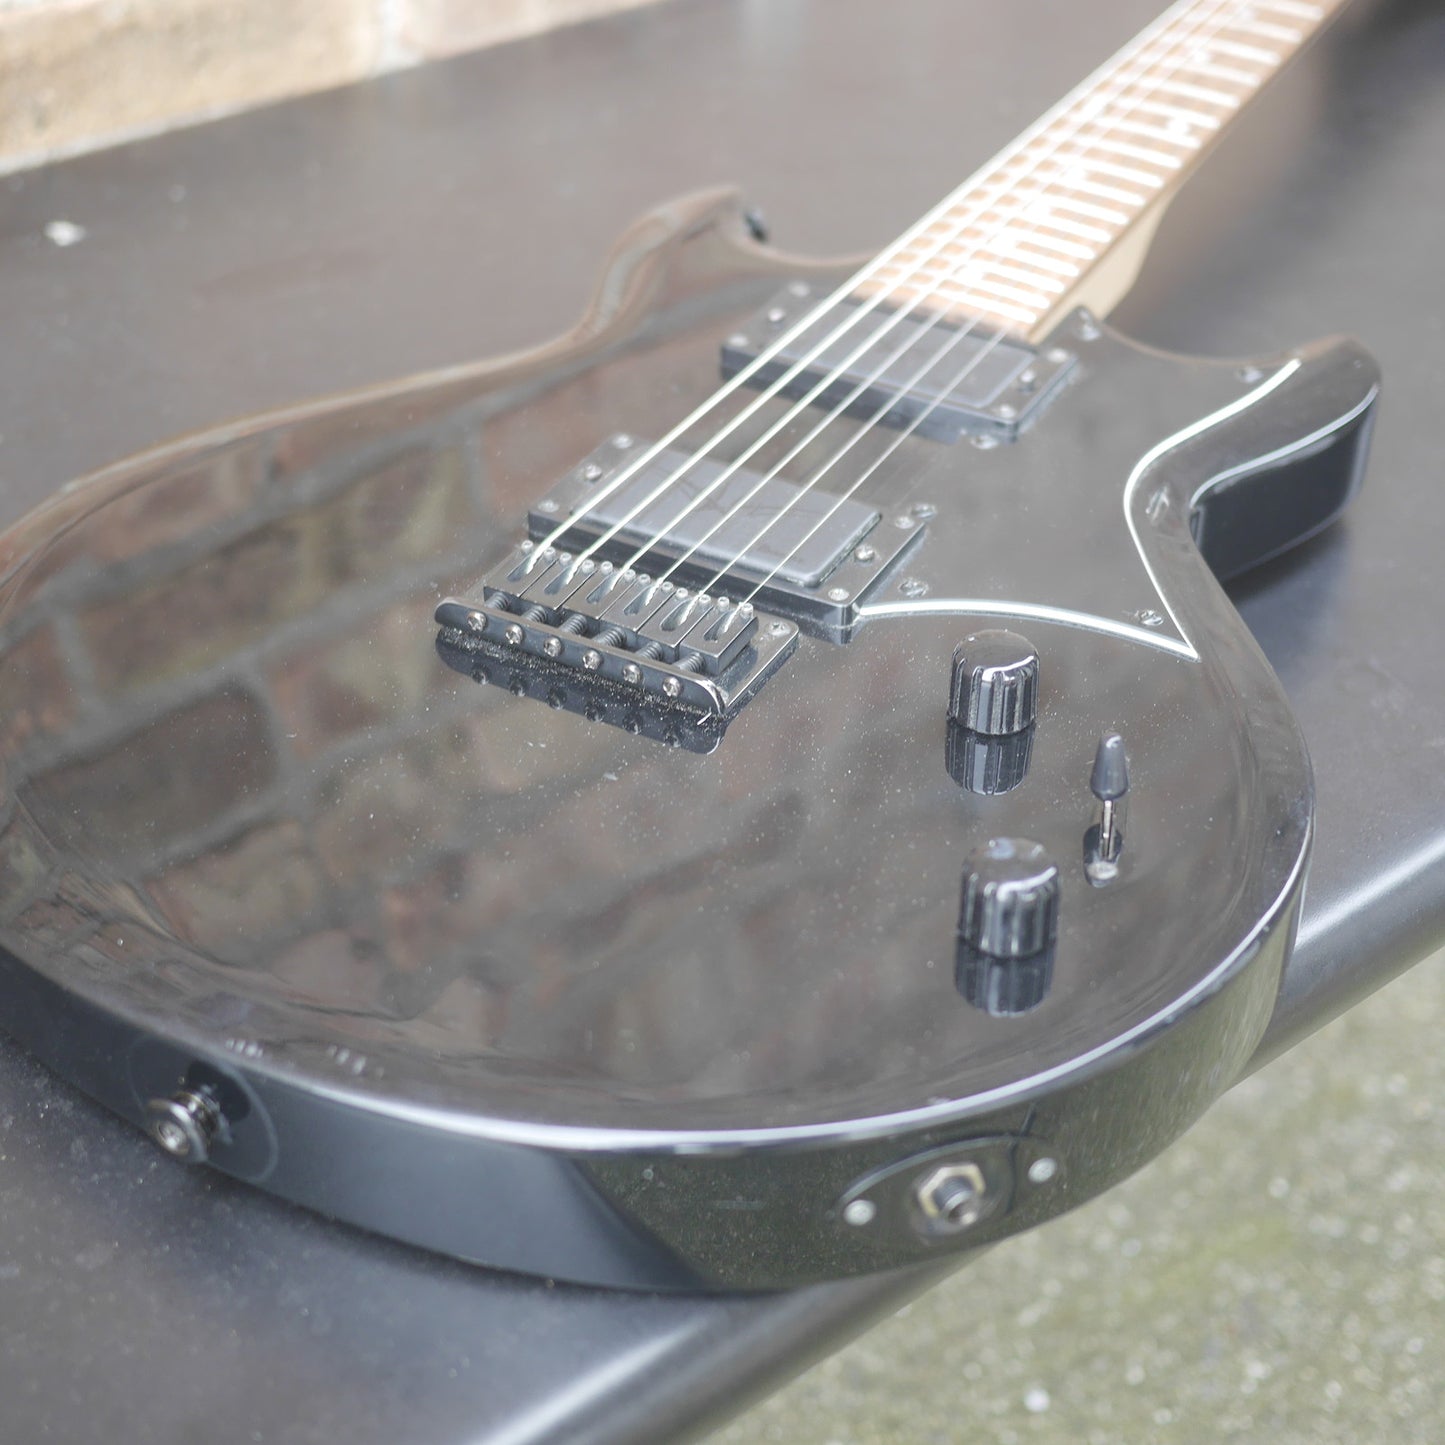 Ibanez GIO Double Cutaway Electric Guitar Black used